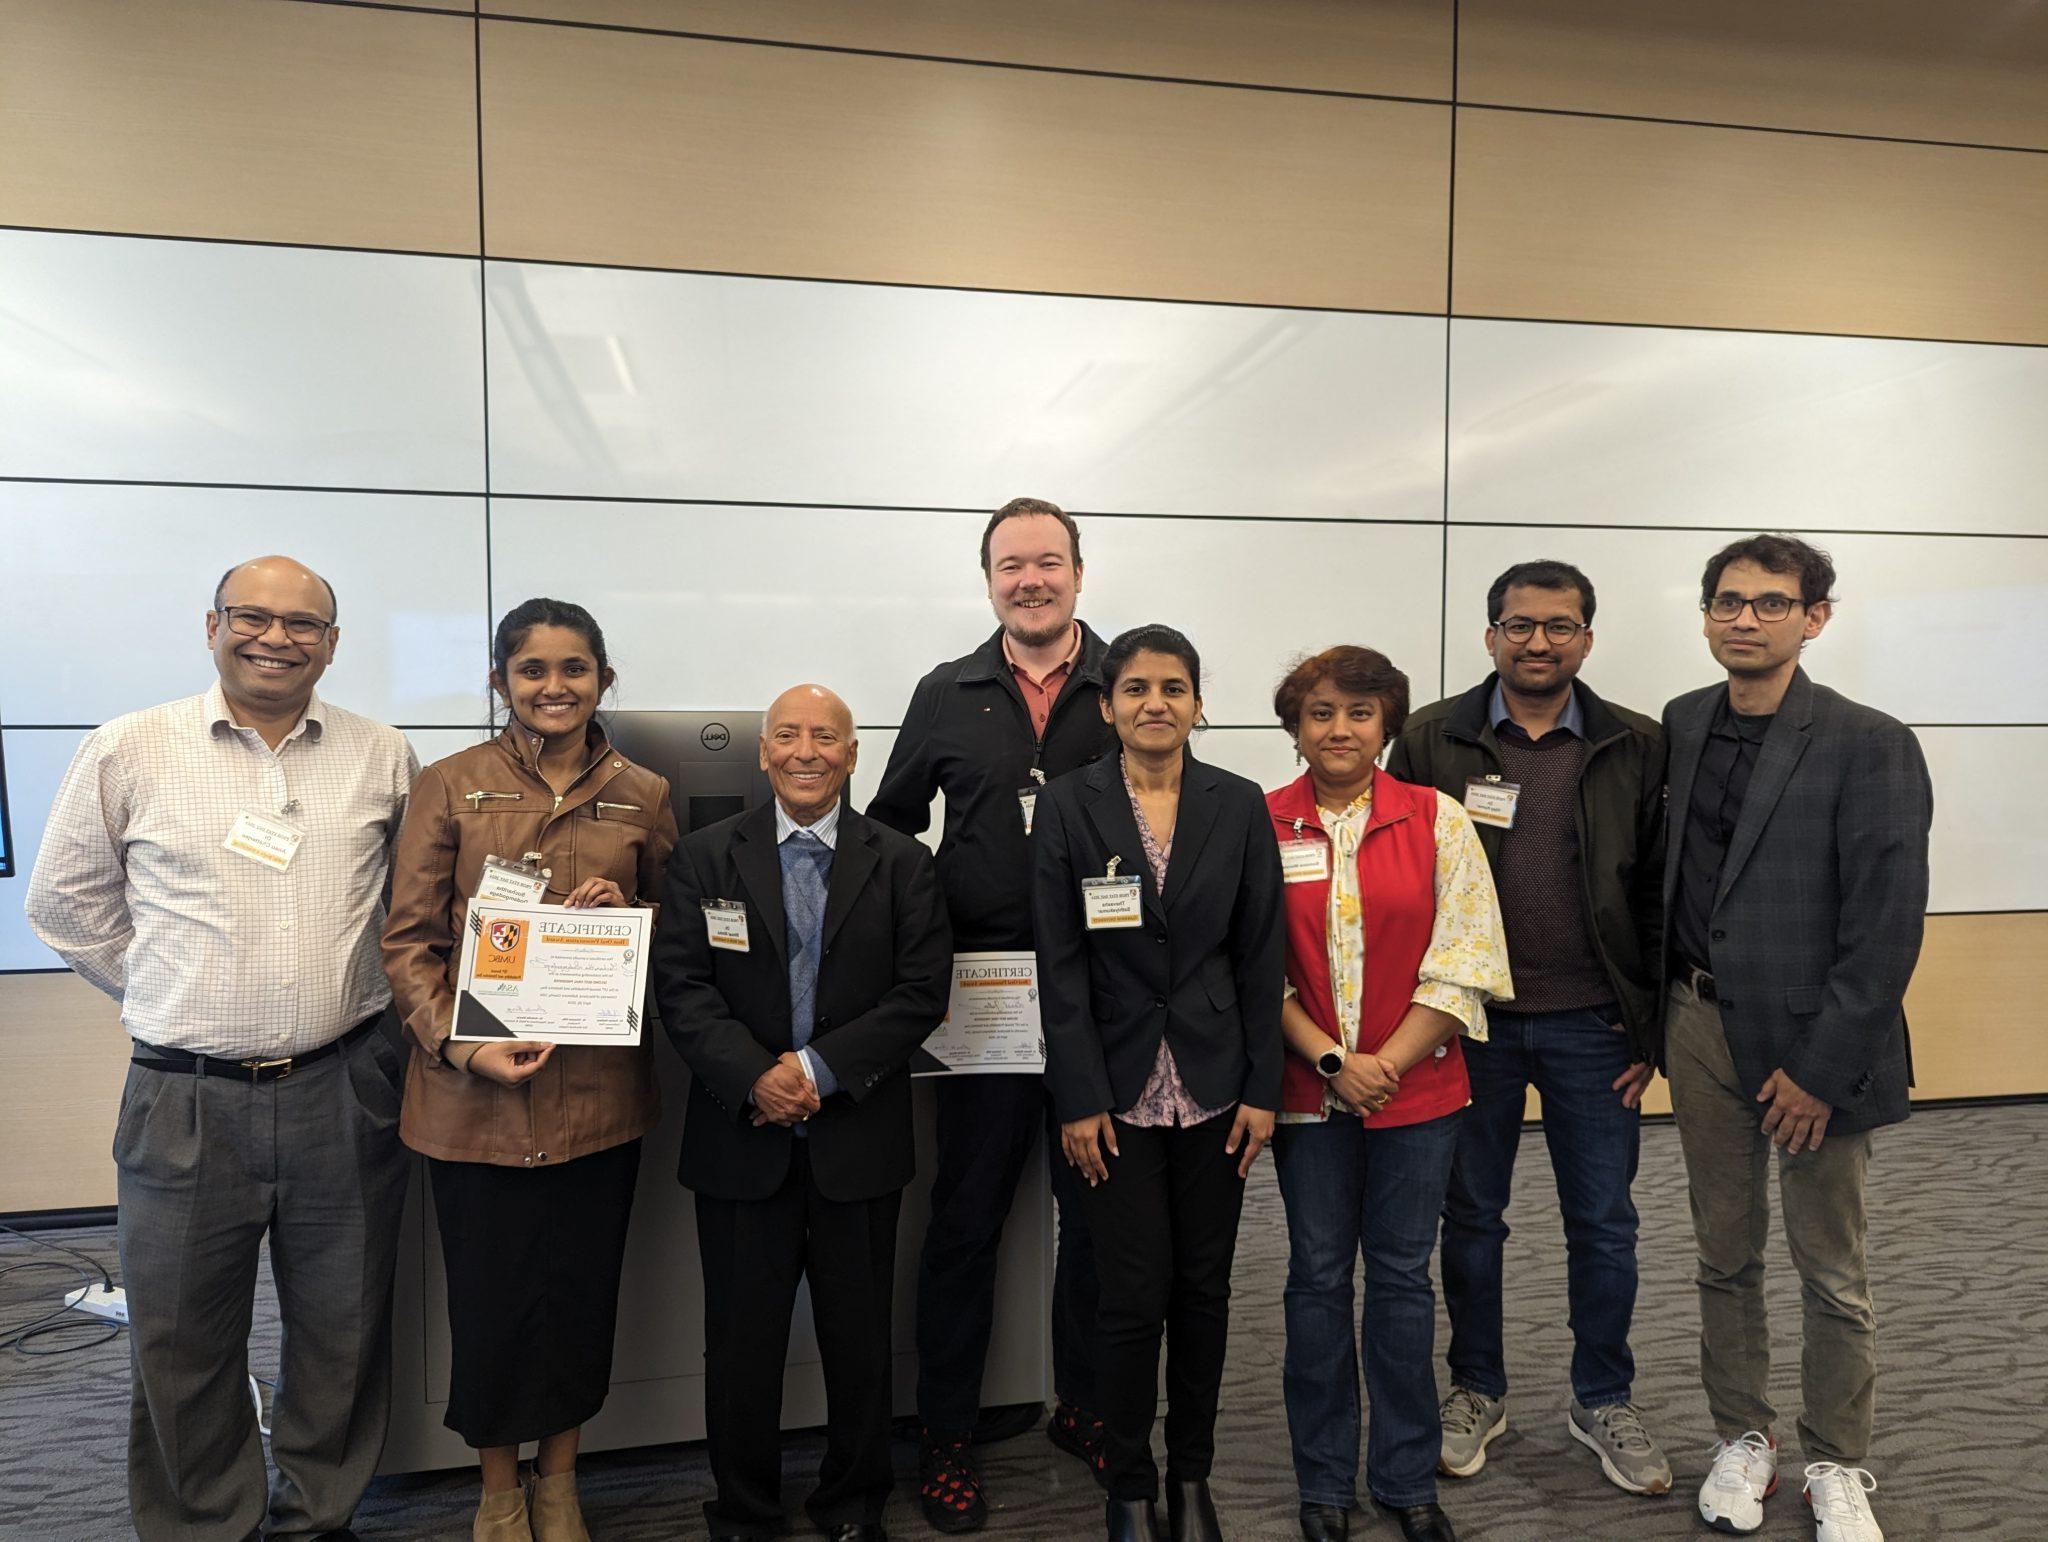 数学博士候选人Daniel Fuller, Thevasha Sathiyakumar, 和Sucharitha Dodamgodage在马里兰大学第15届年度概率与统计日上获得微生物组分析奖.